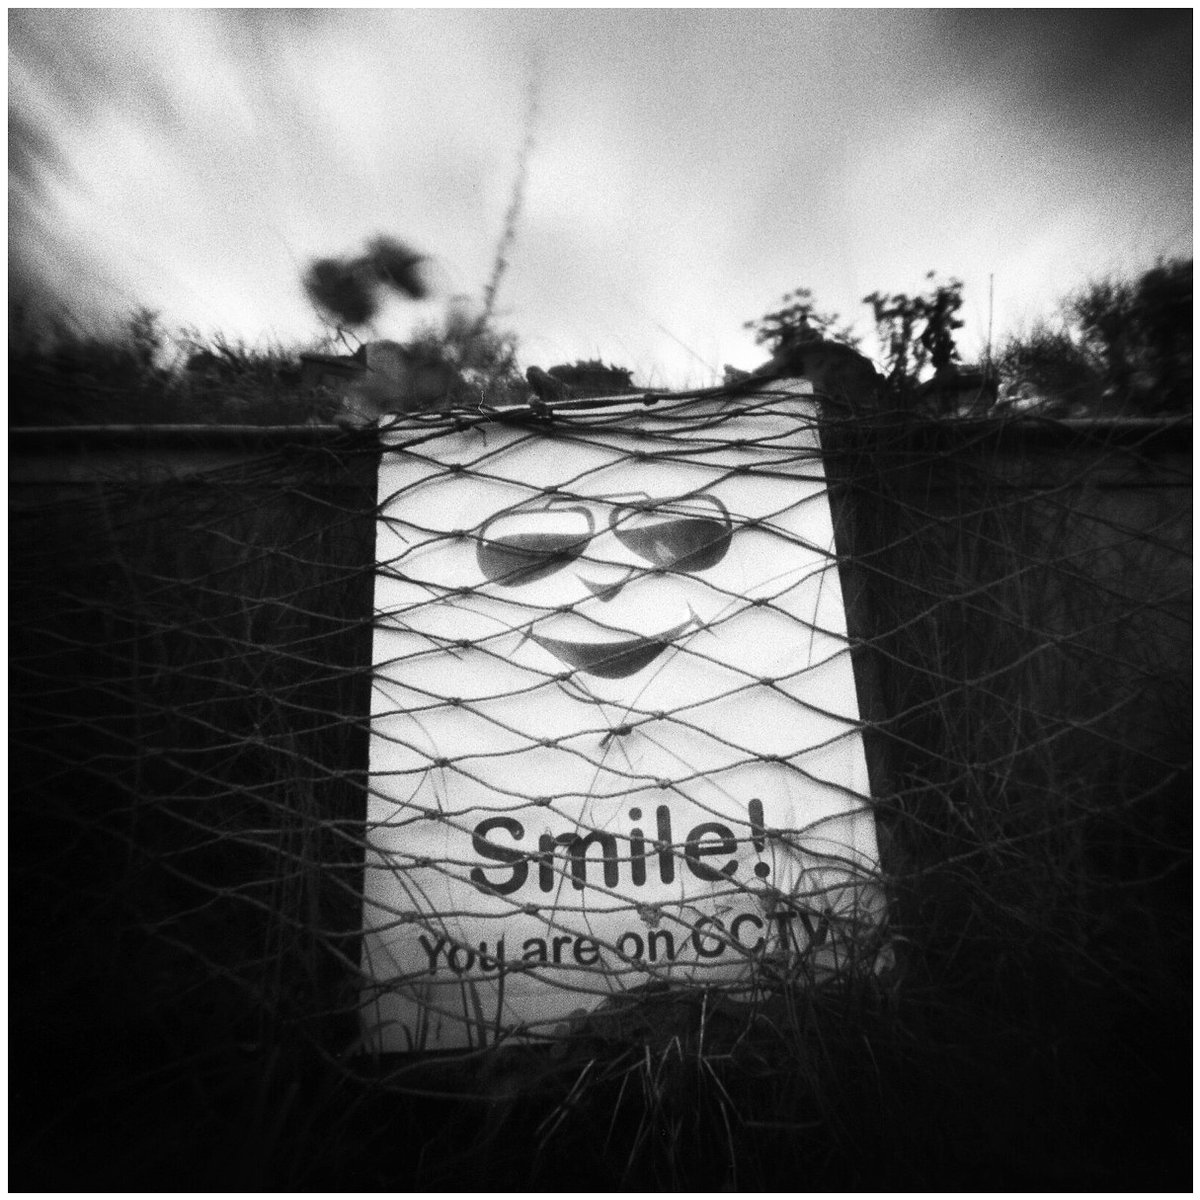 Smile!
@ONDUpinhole 
#pinhole #fomapan100 #filmphotography #believeinfilm